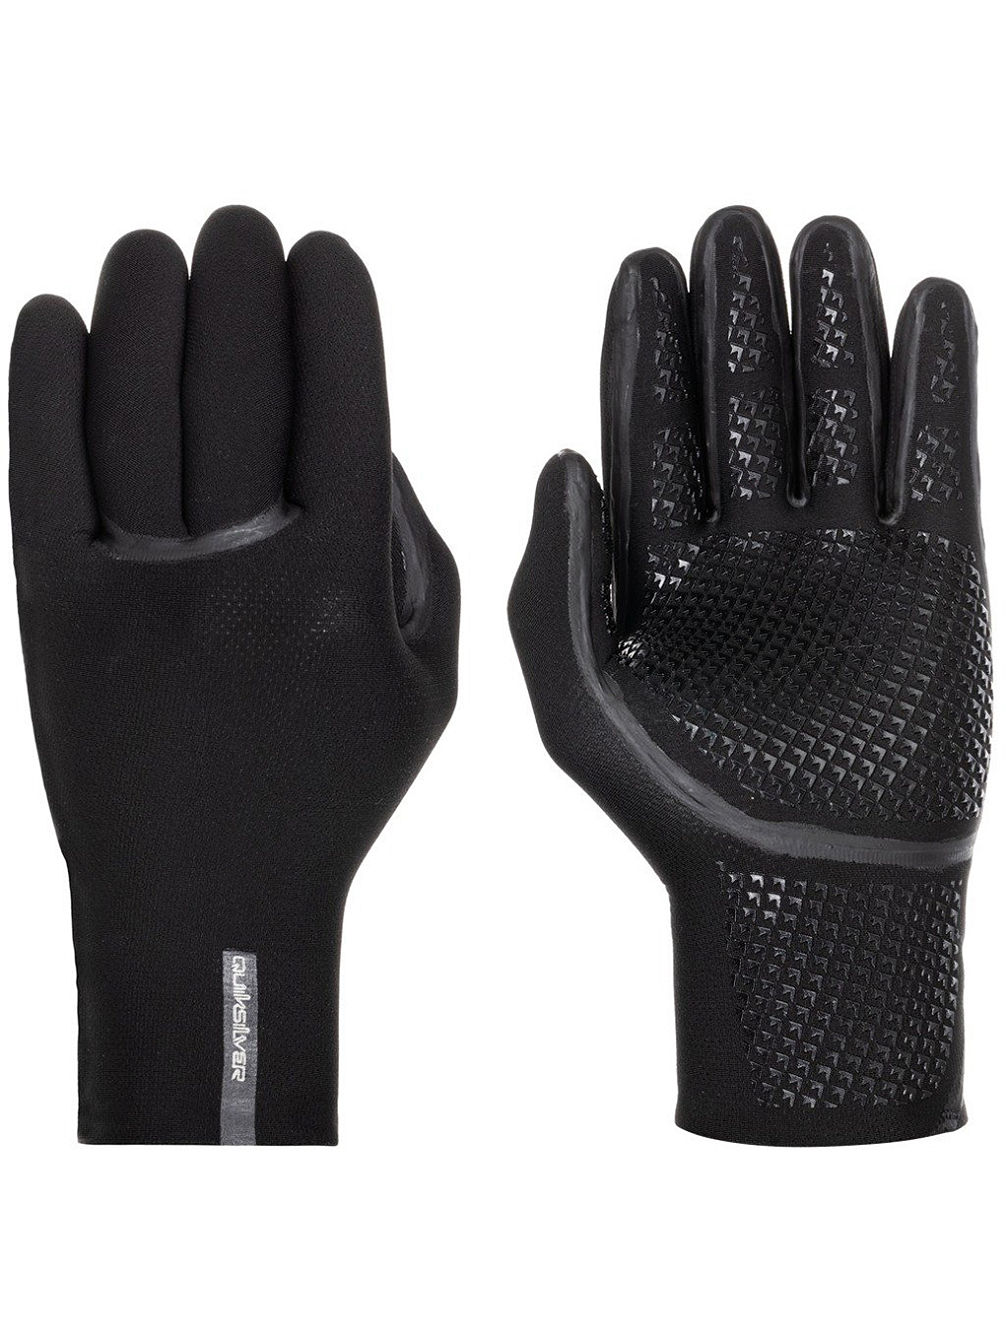 3mm Marathon Sessions 5Finger Gloves